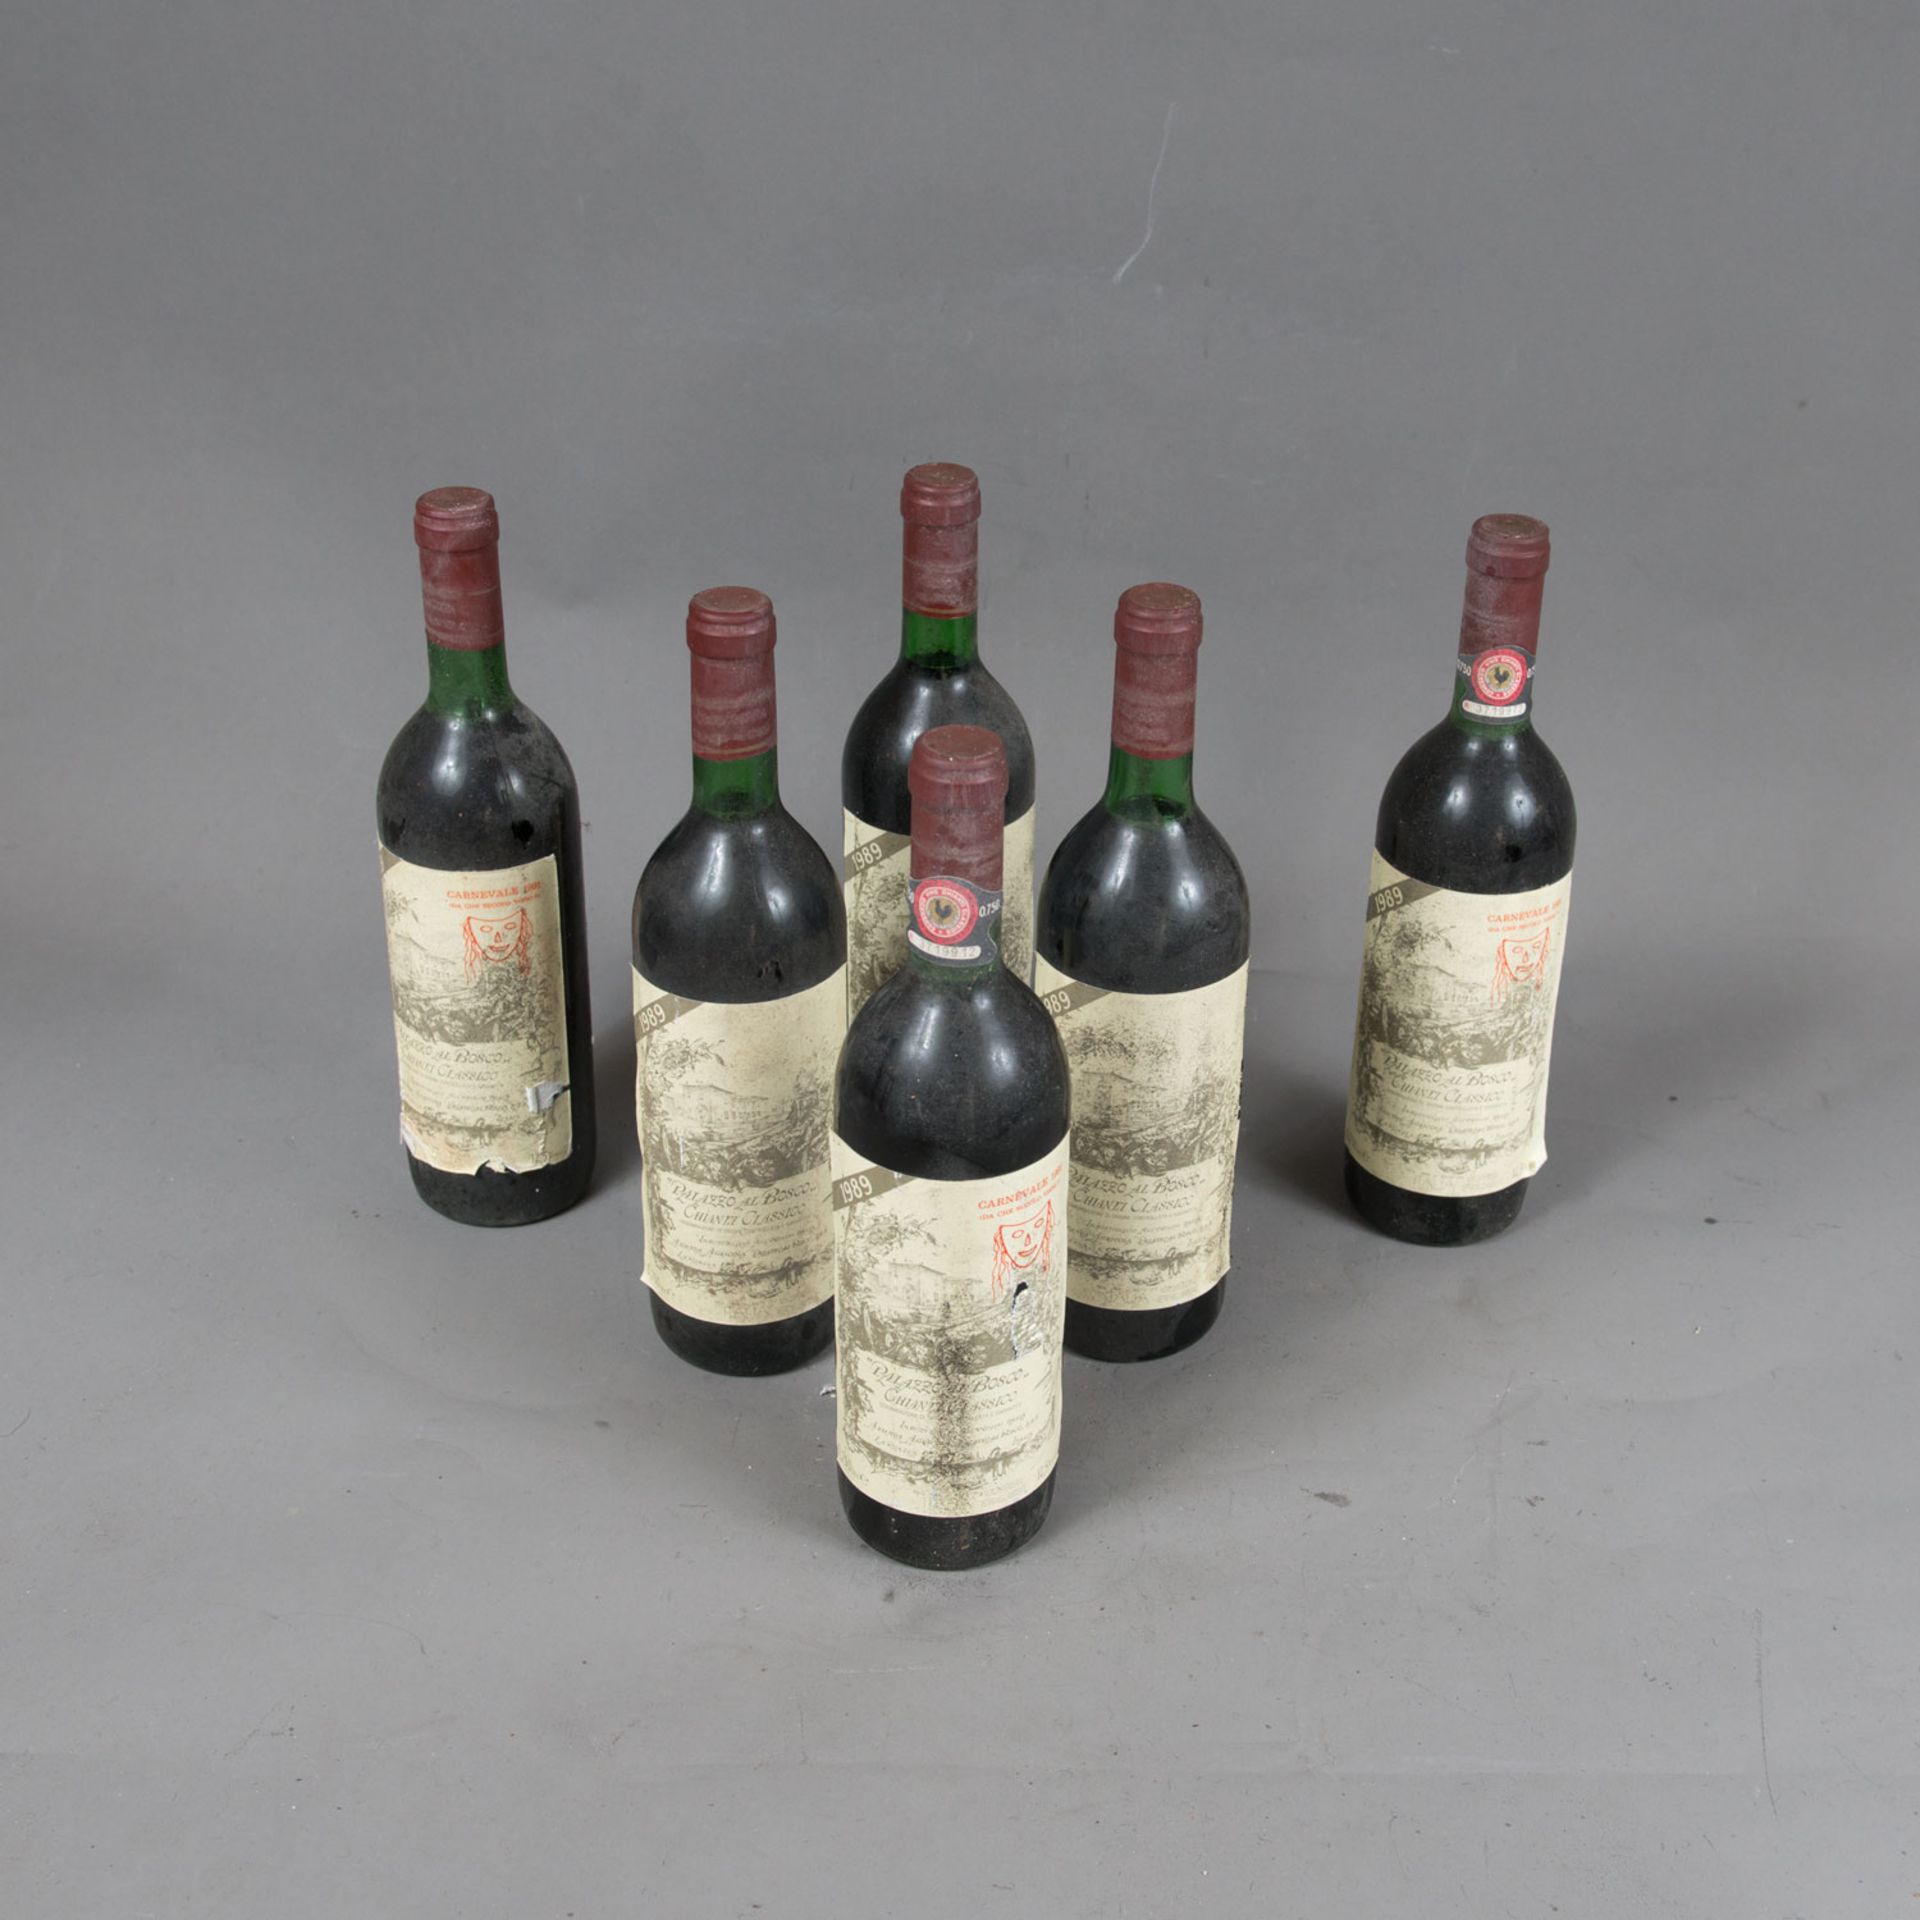 Six Bottles of Chianti Classico